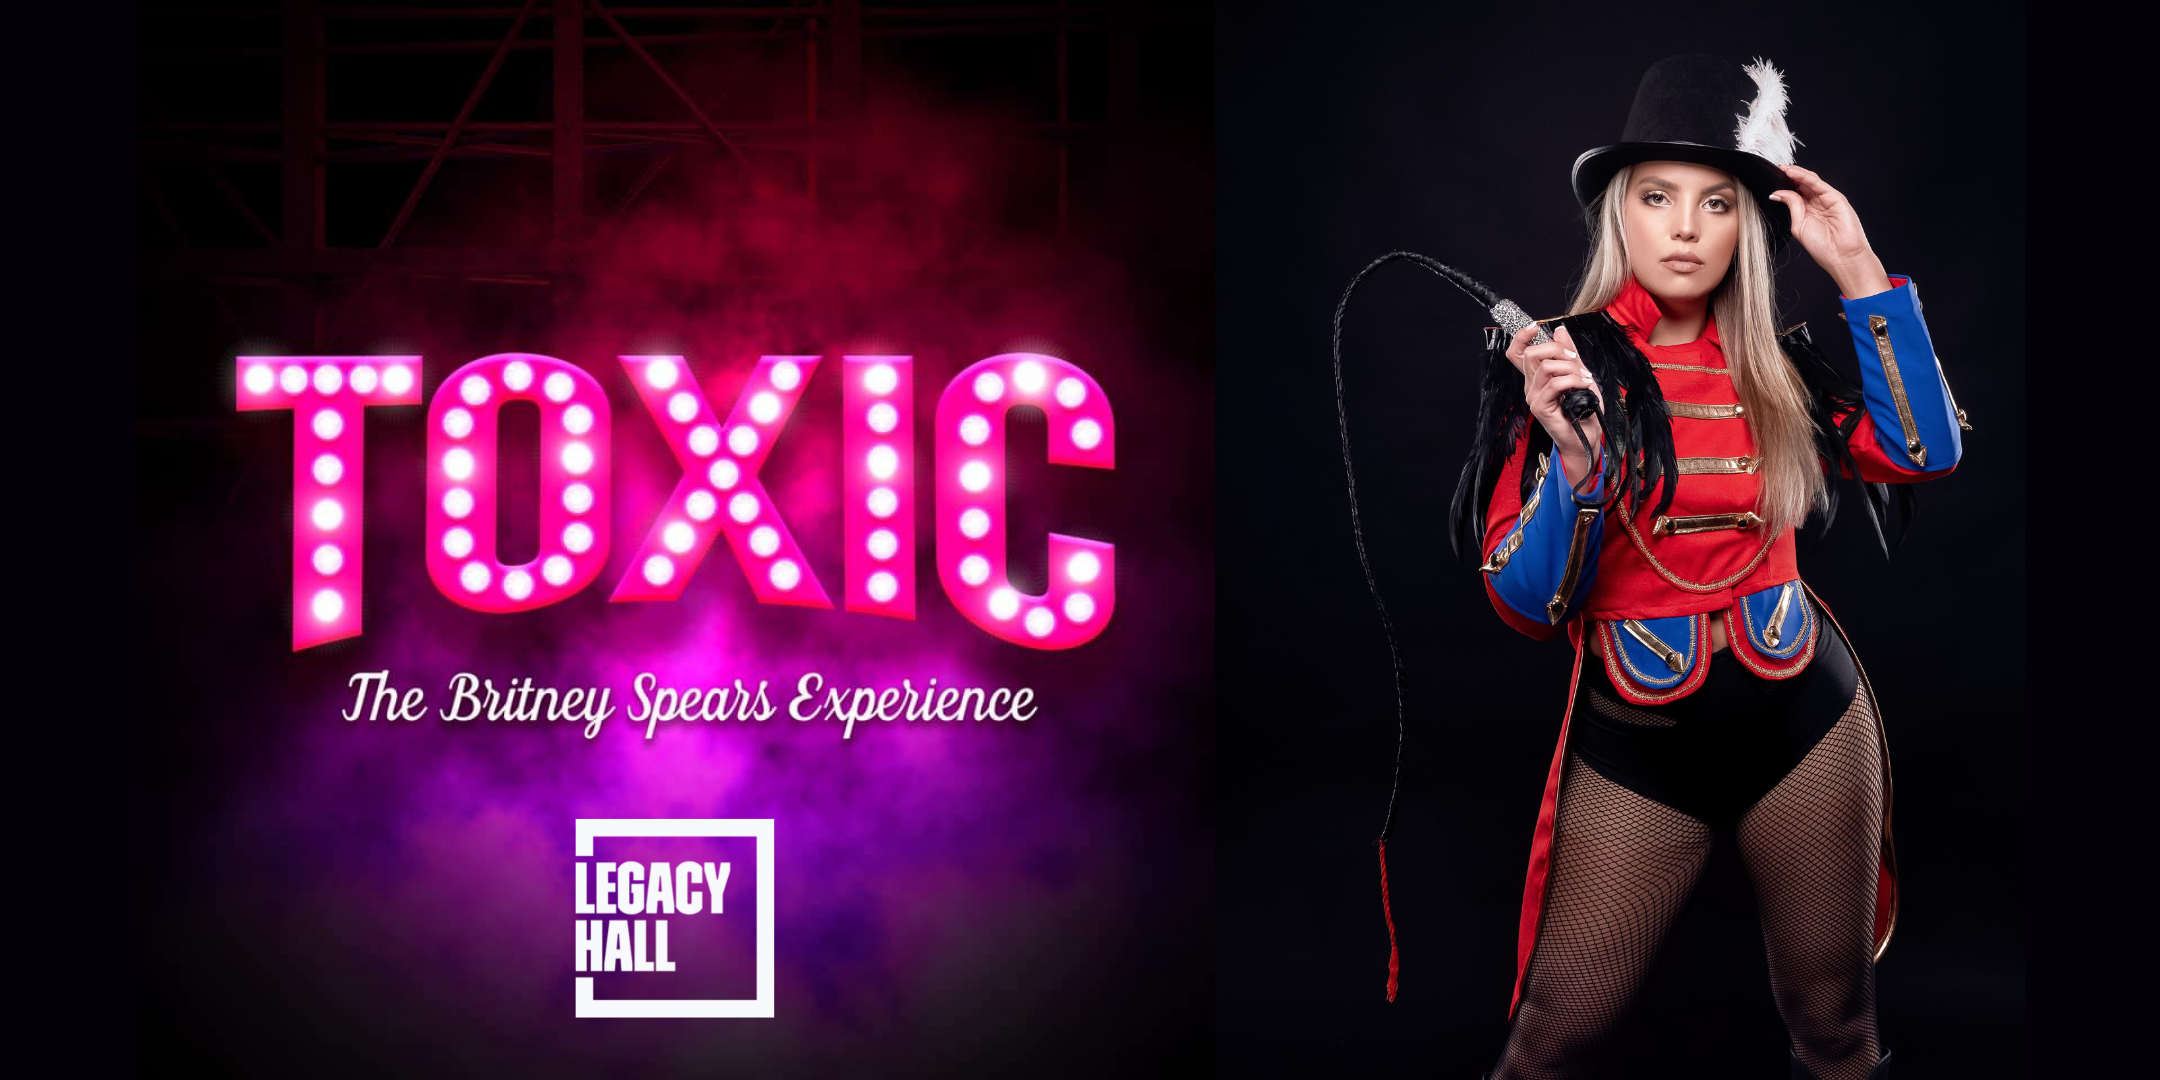 Britney Spears Tribute: Toxic - hero